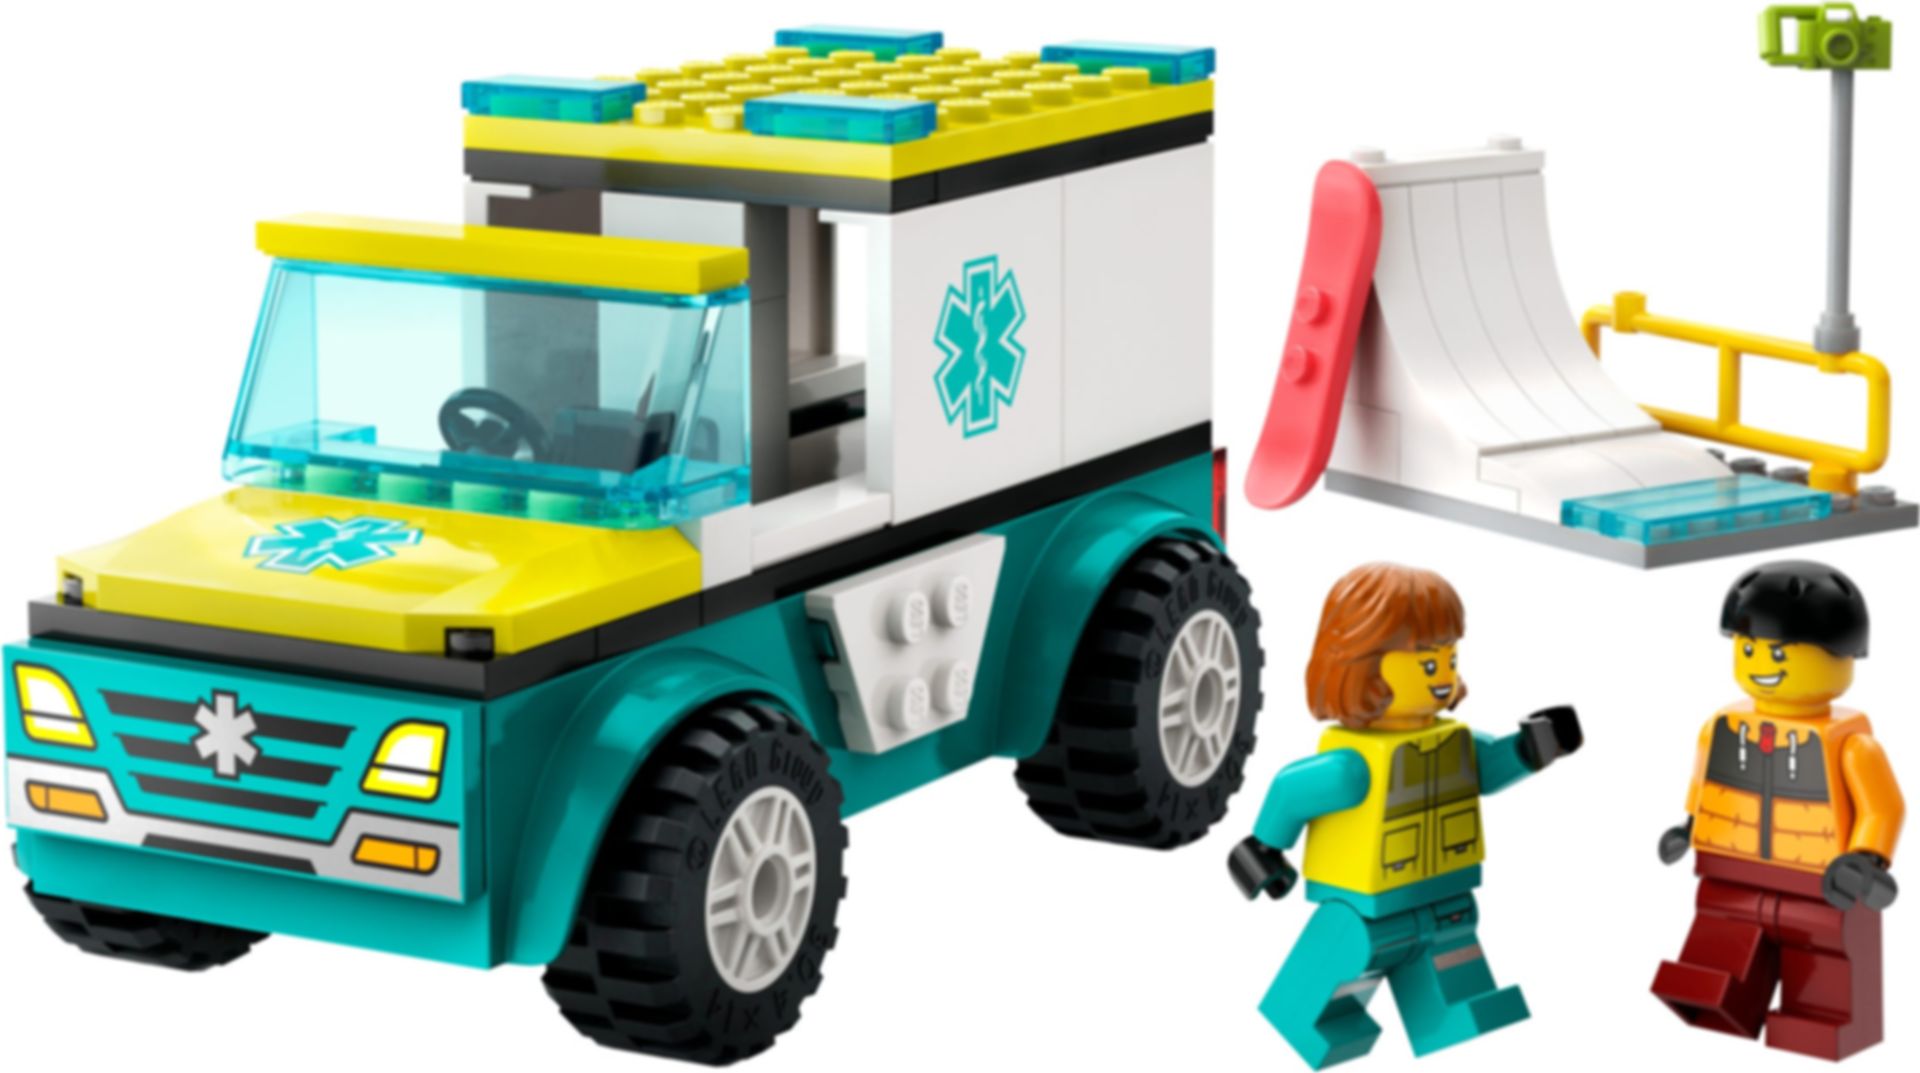 LEGO® City Emergency Ambulance and Snowboarder components